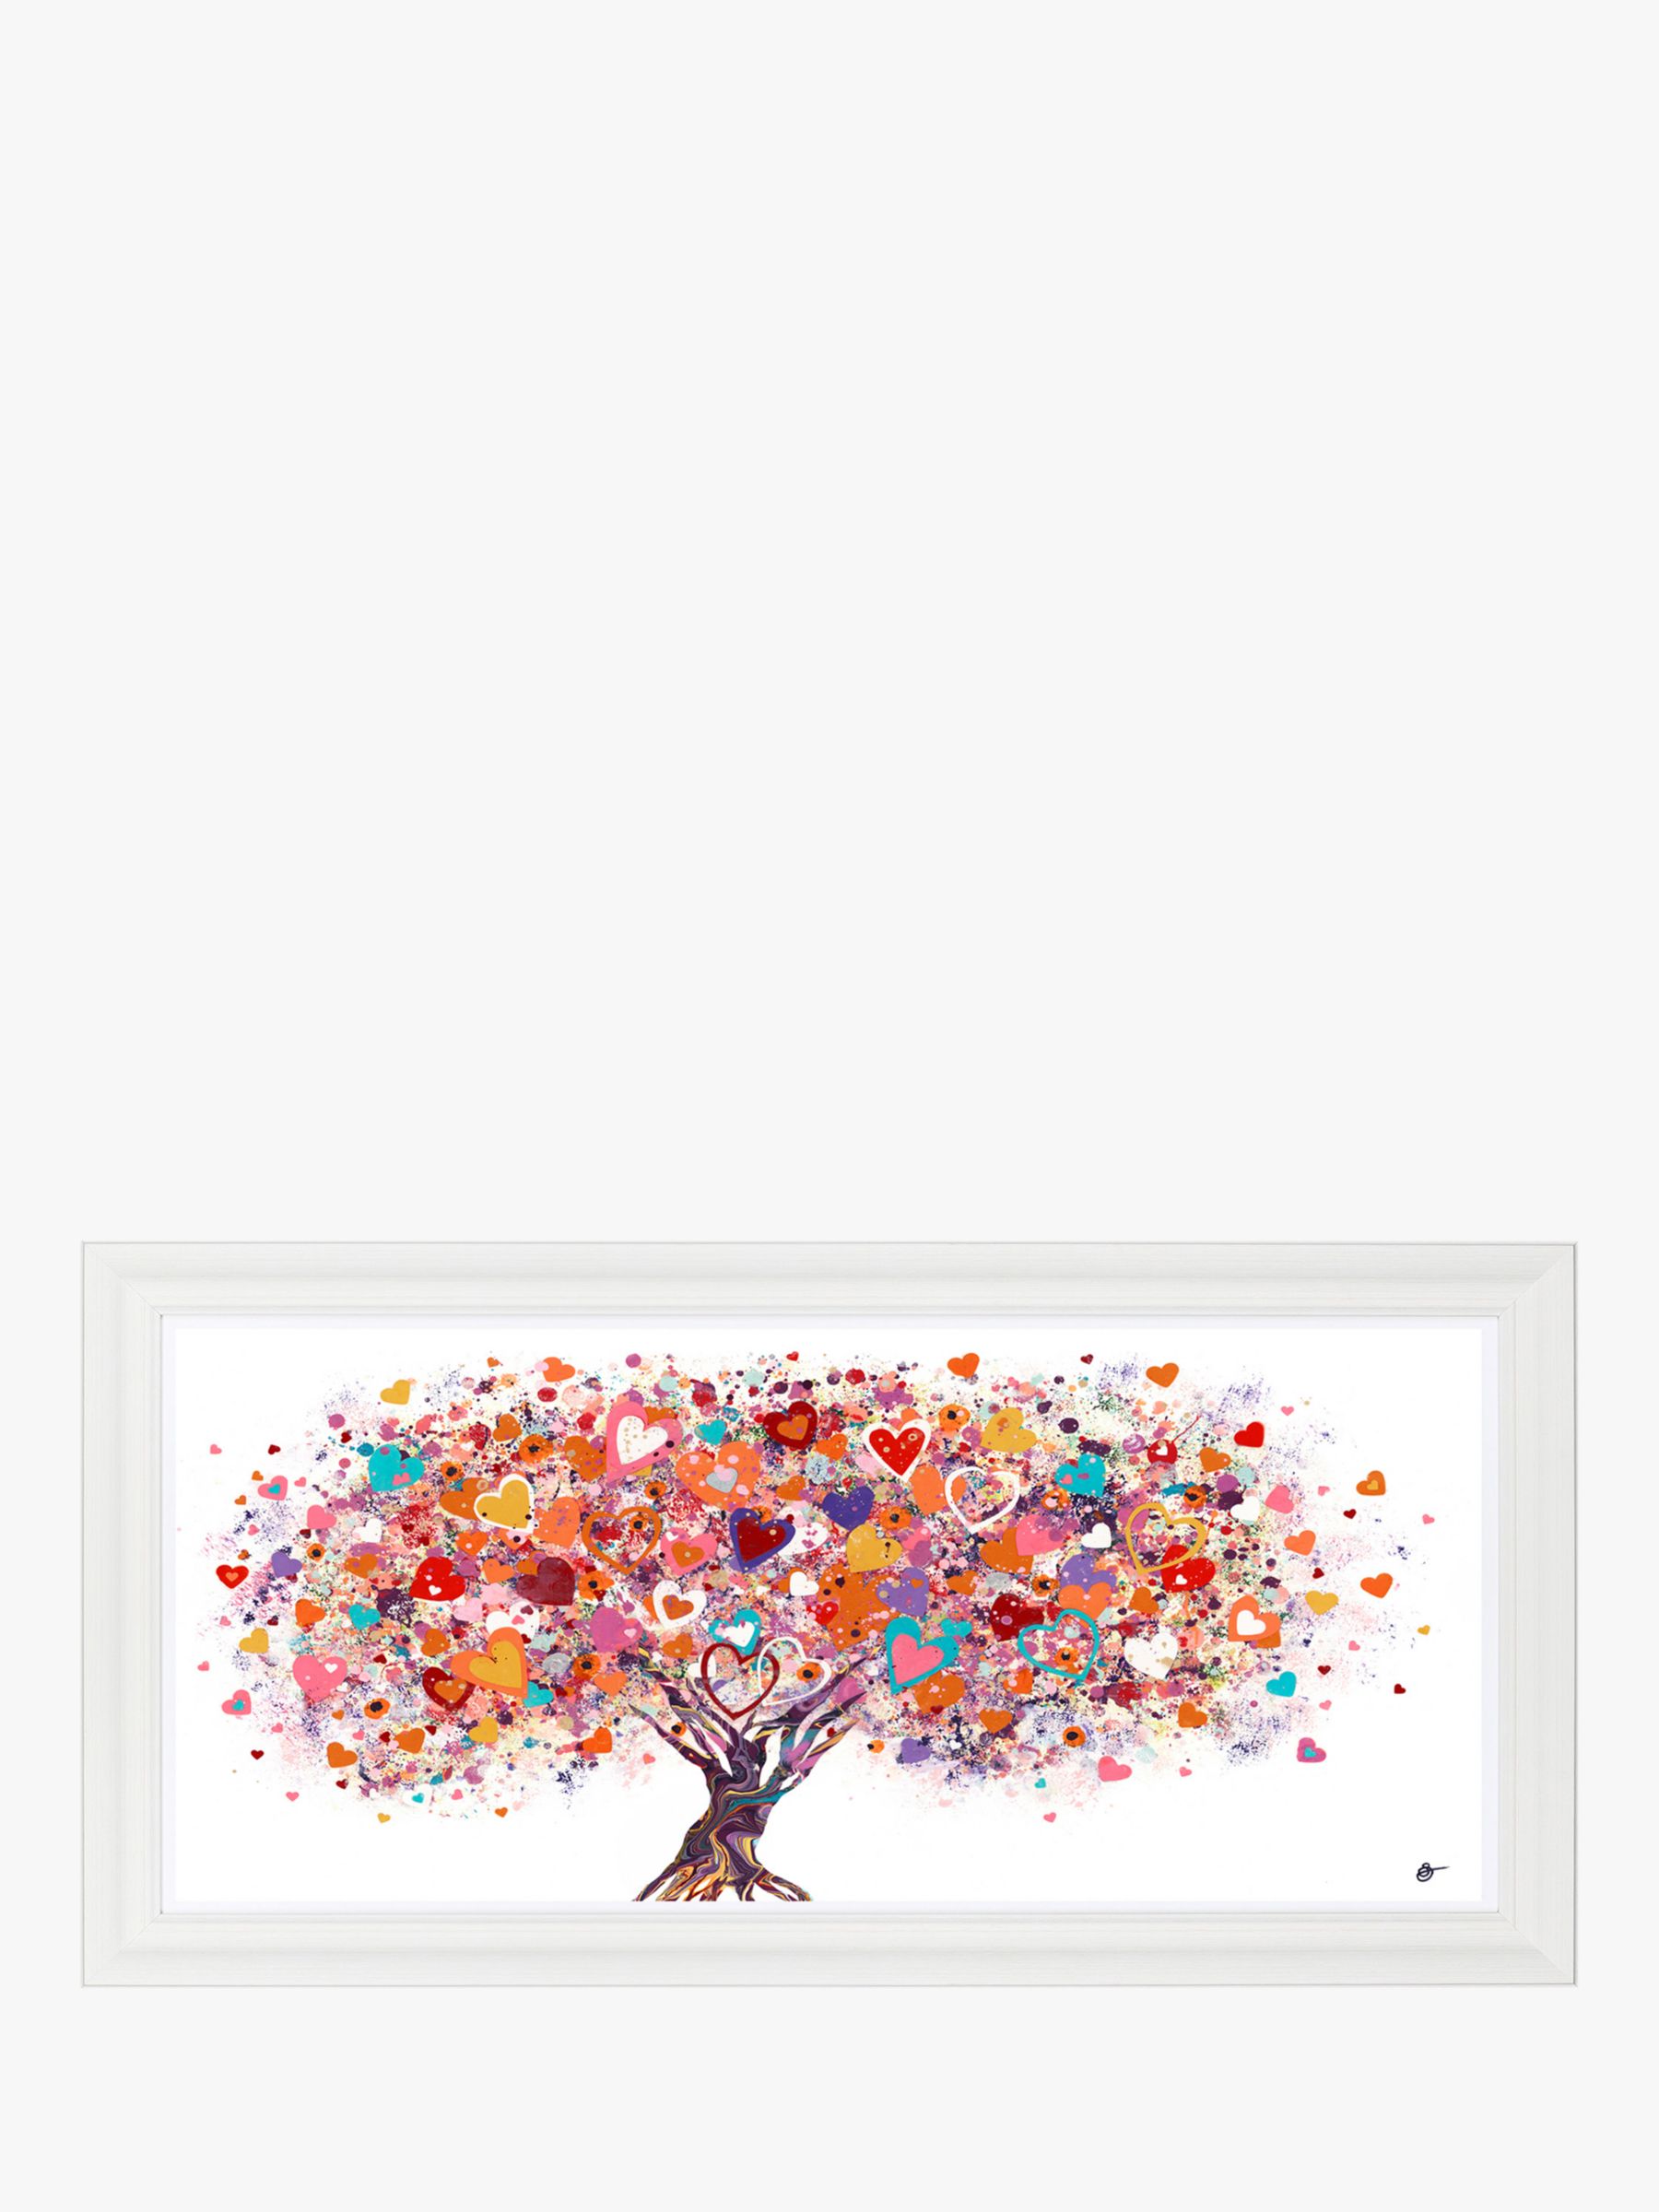 John Lewis Sara Otter 'Tree Of Hearts' Framed Print, 56 x 111cm, Pink/Multi